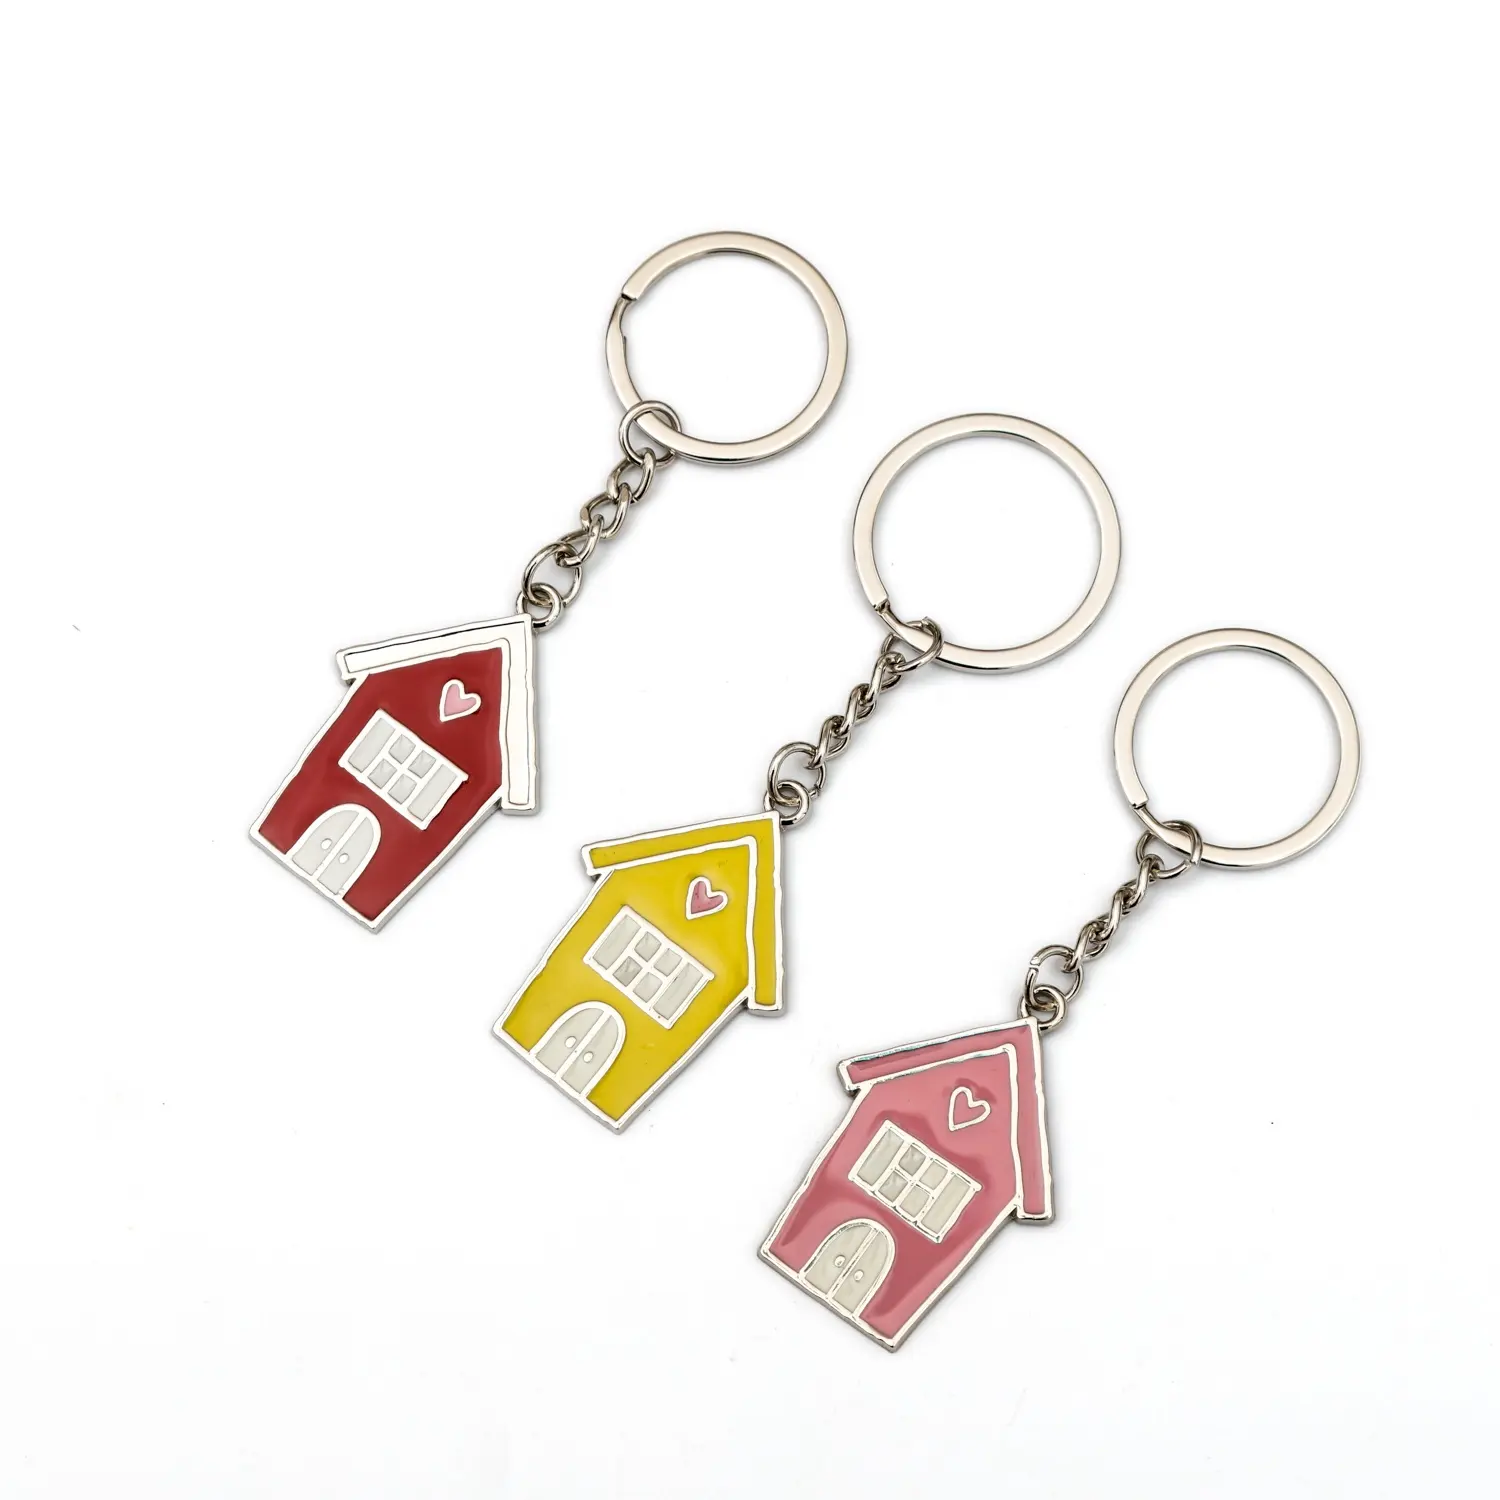 Customize house keys